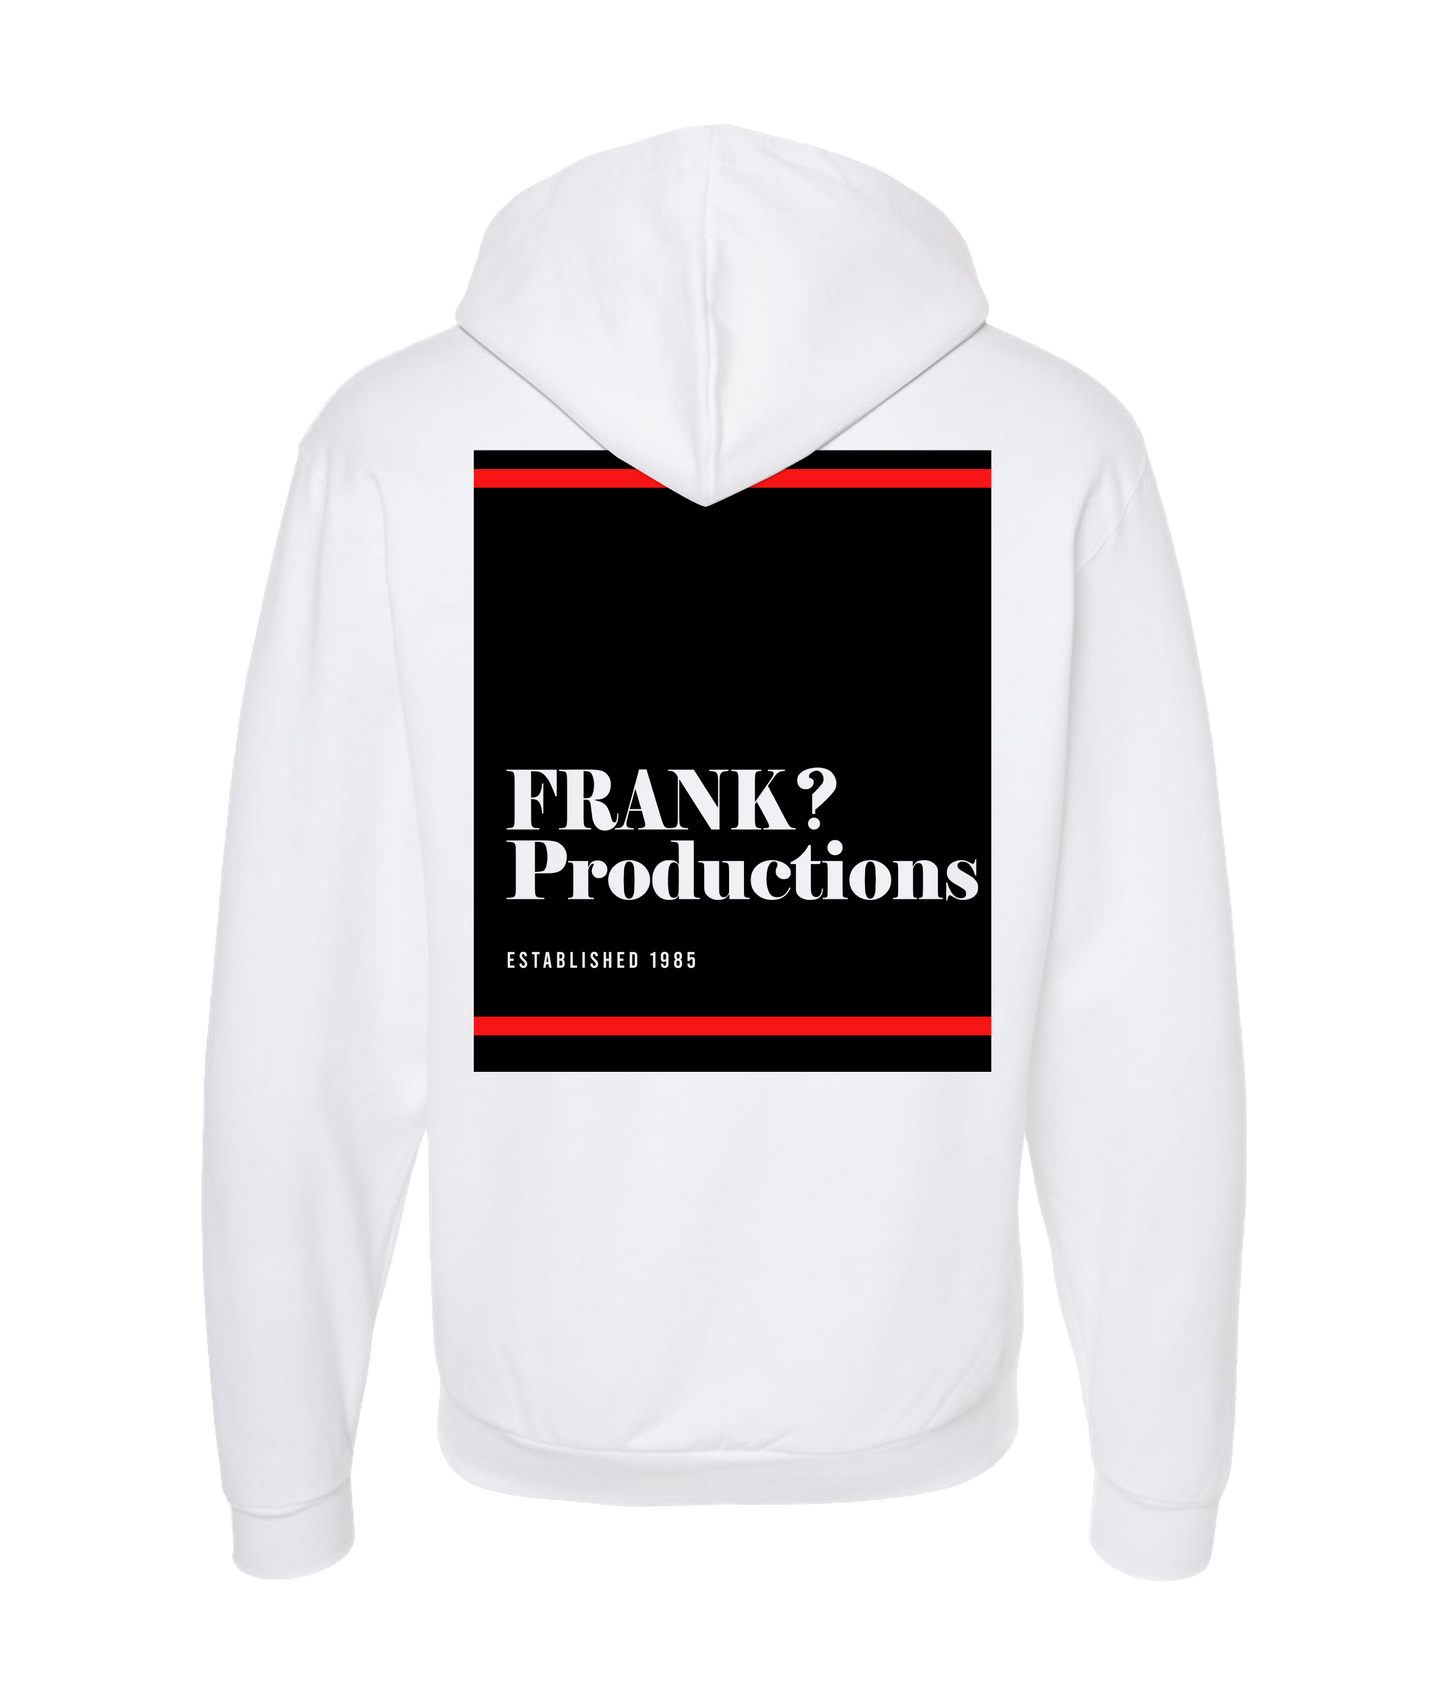 FRANK? Piccolella - Established 1985 - White Zip Up Hoodie